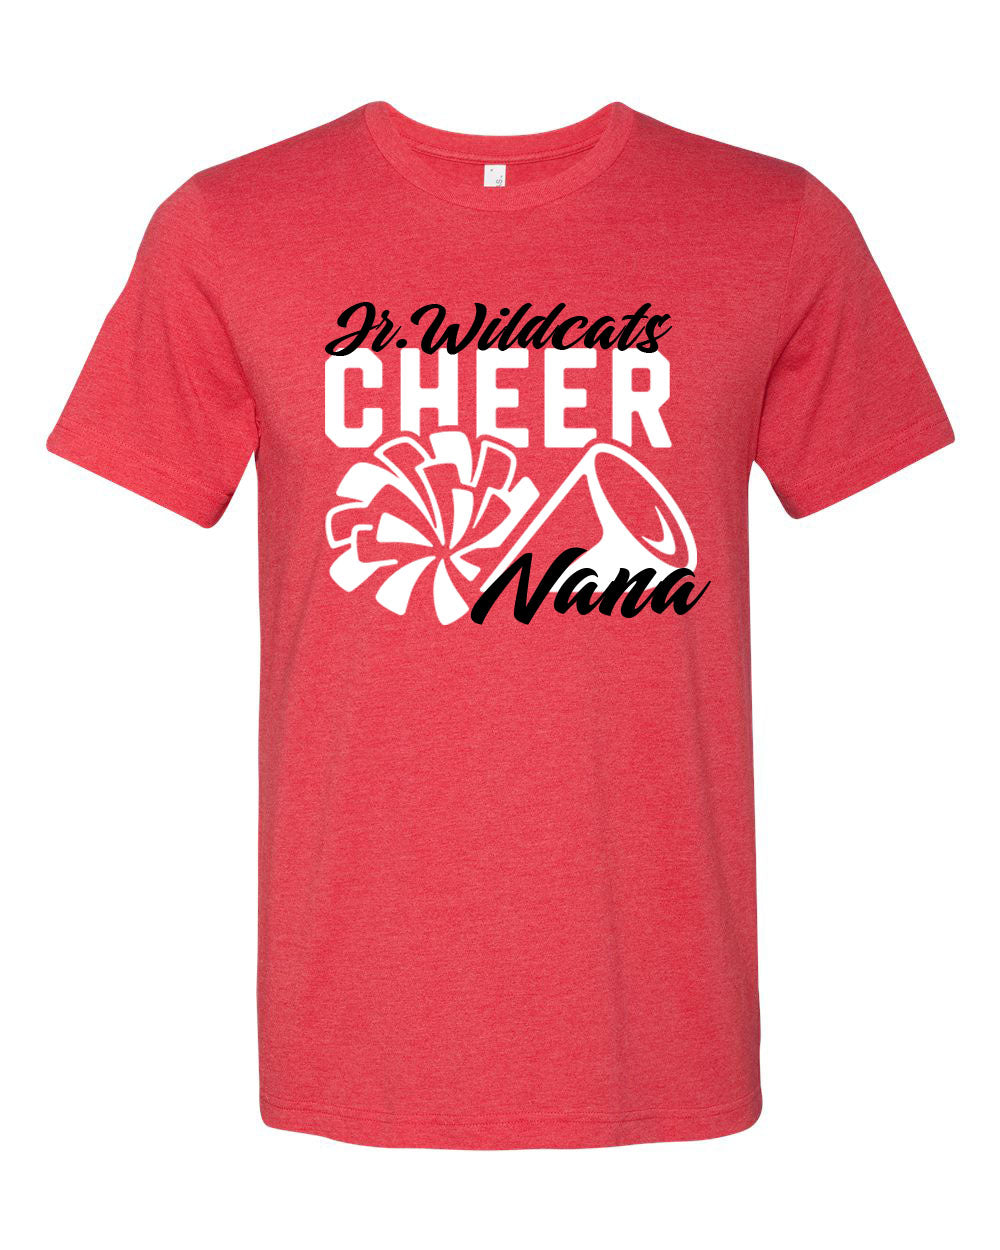 High Point Cheer design 4 T-Shirt